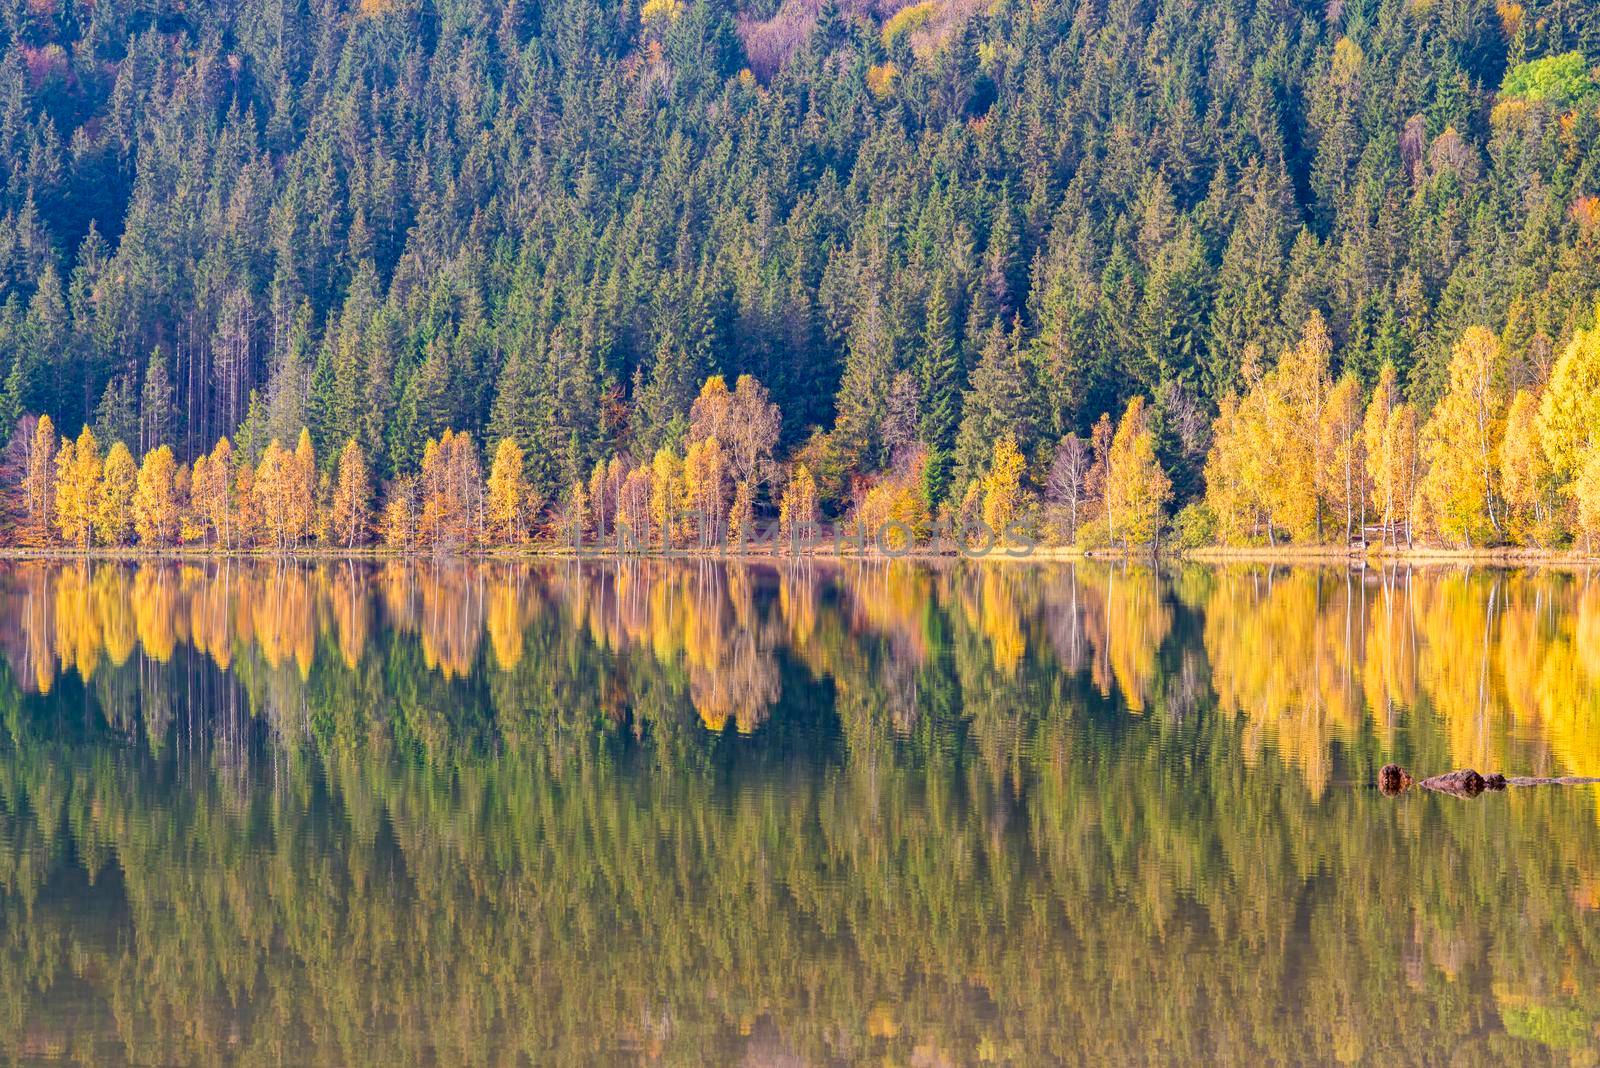 Mirroring yellow birch trees near lake by savcoco